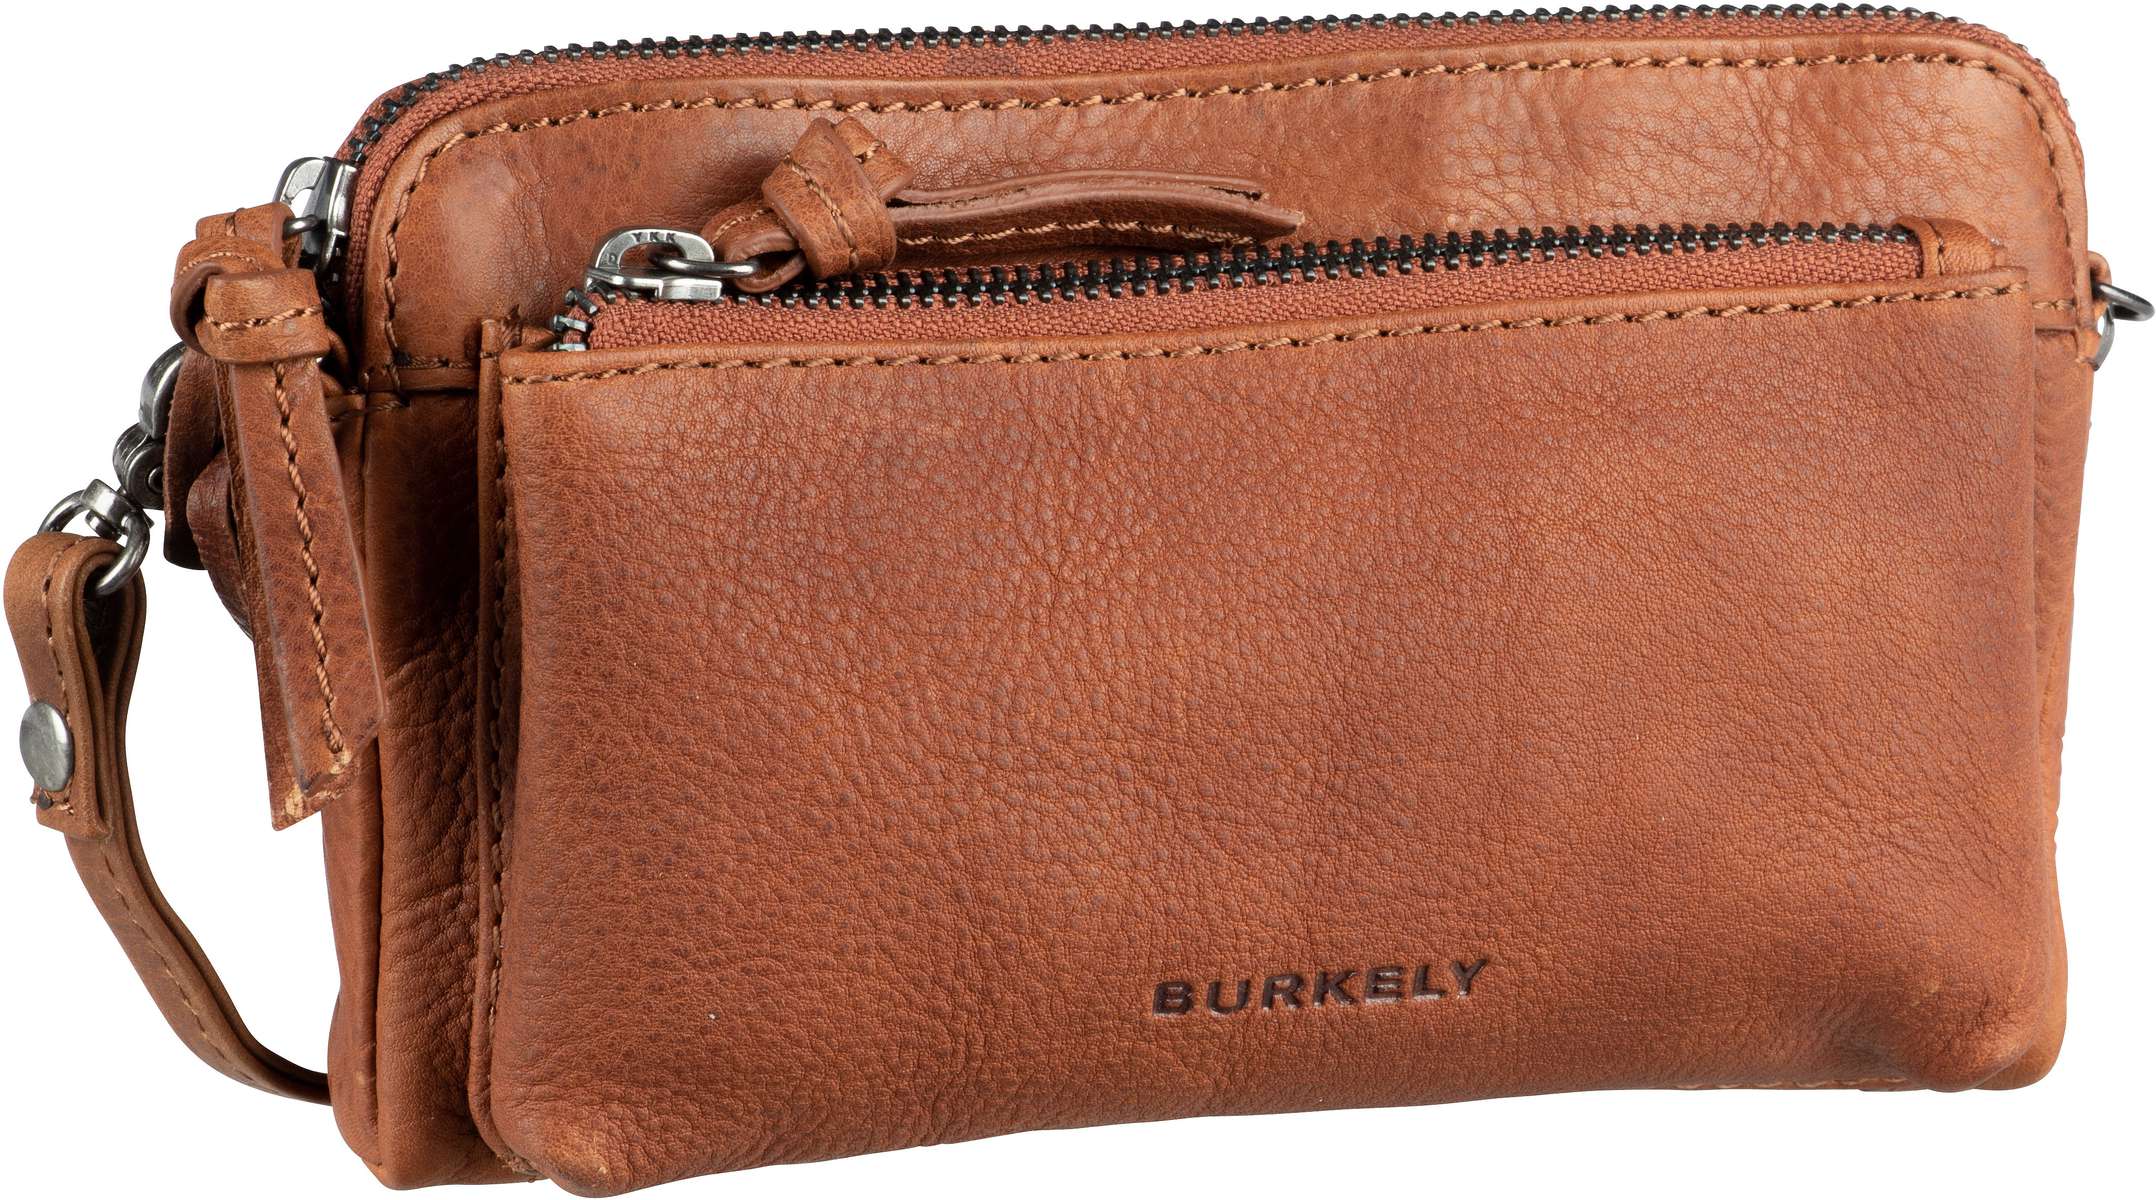 Burkely Antique Avery Mini Bag 8718 - Cognac